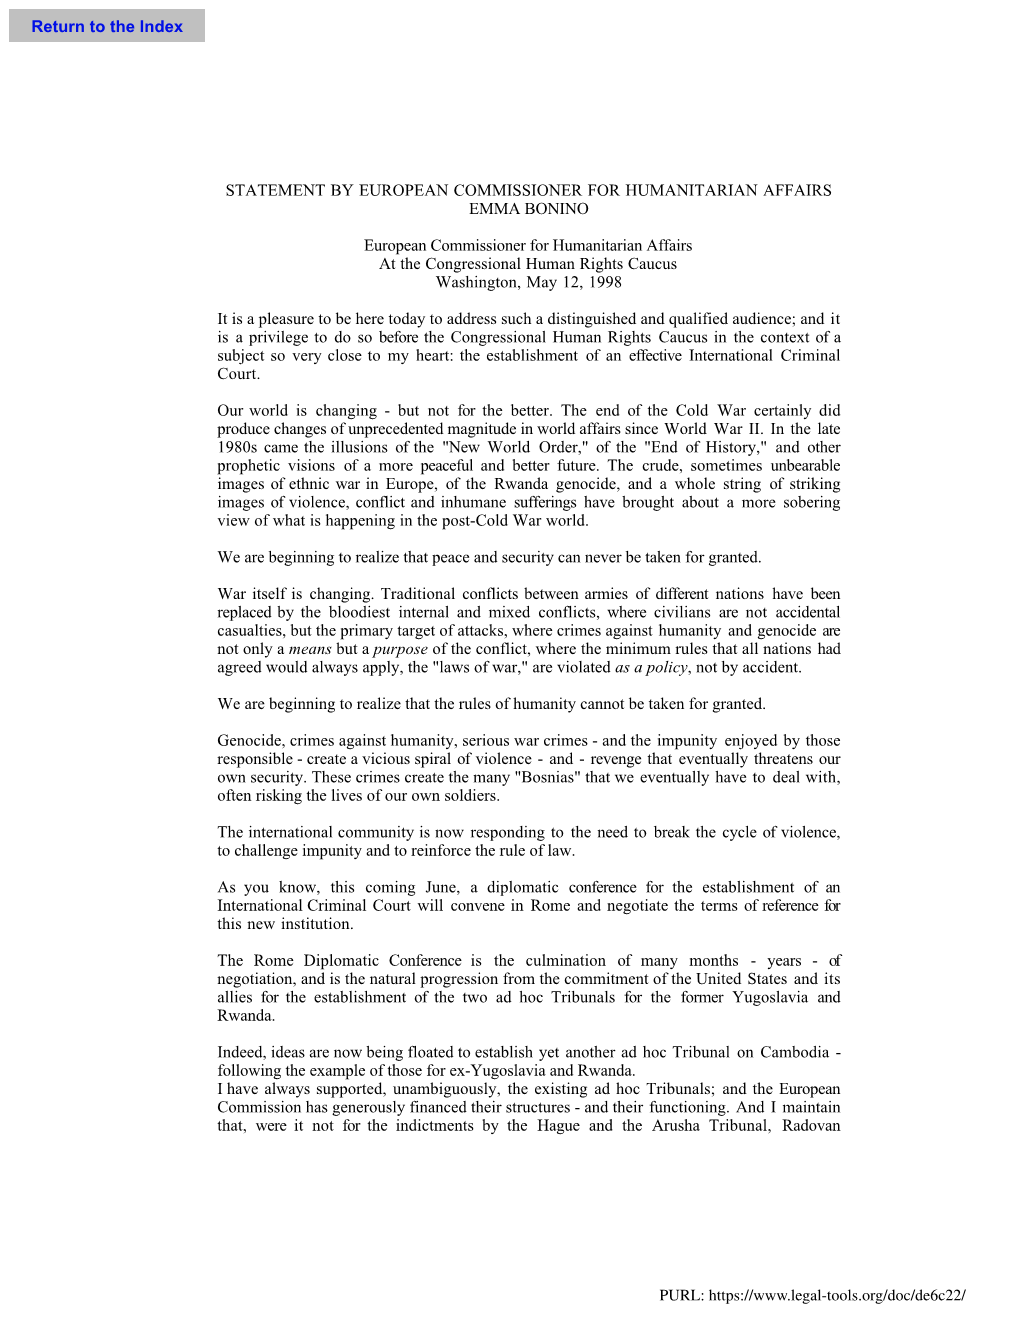 Statement by European Commissioner for Humanitarian Affairs Emma Bonino